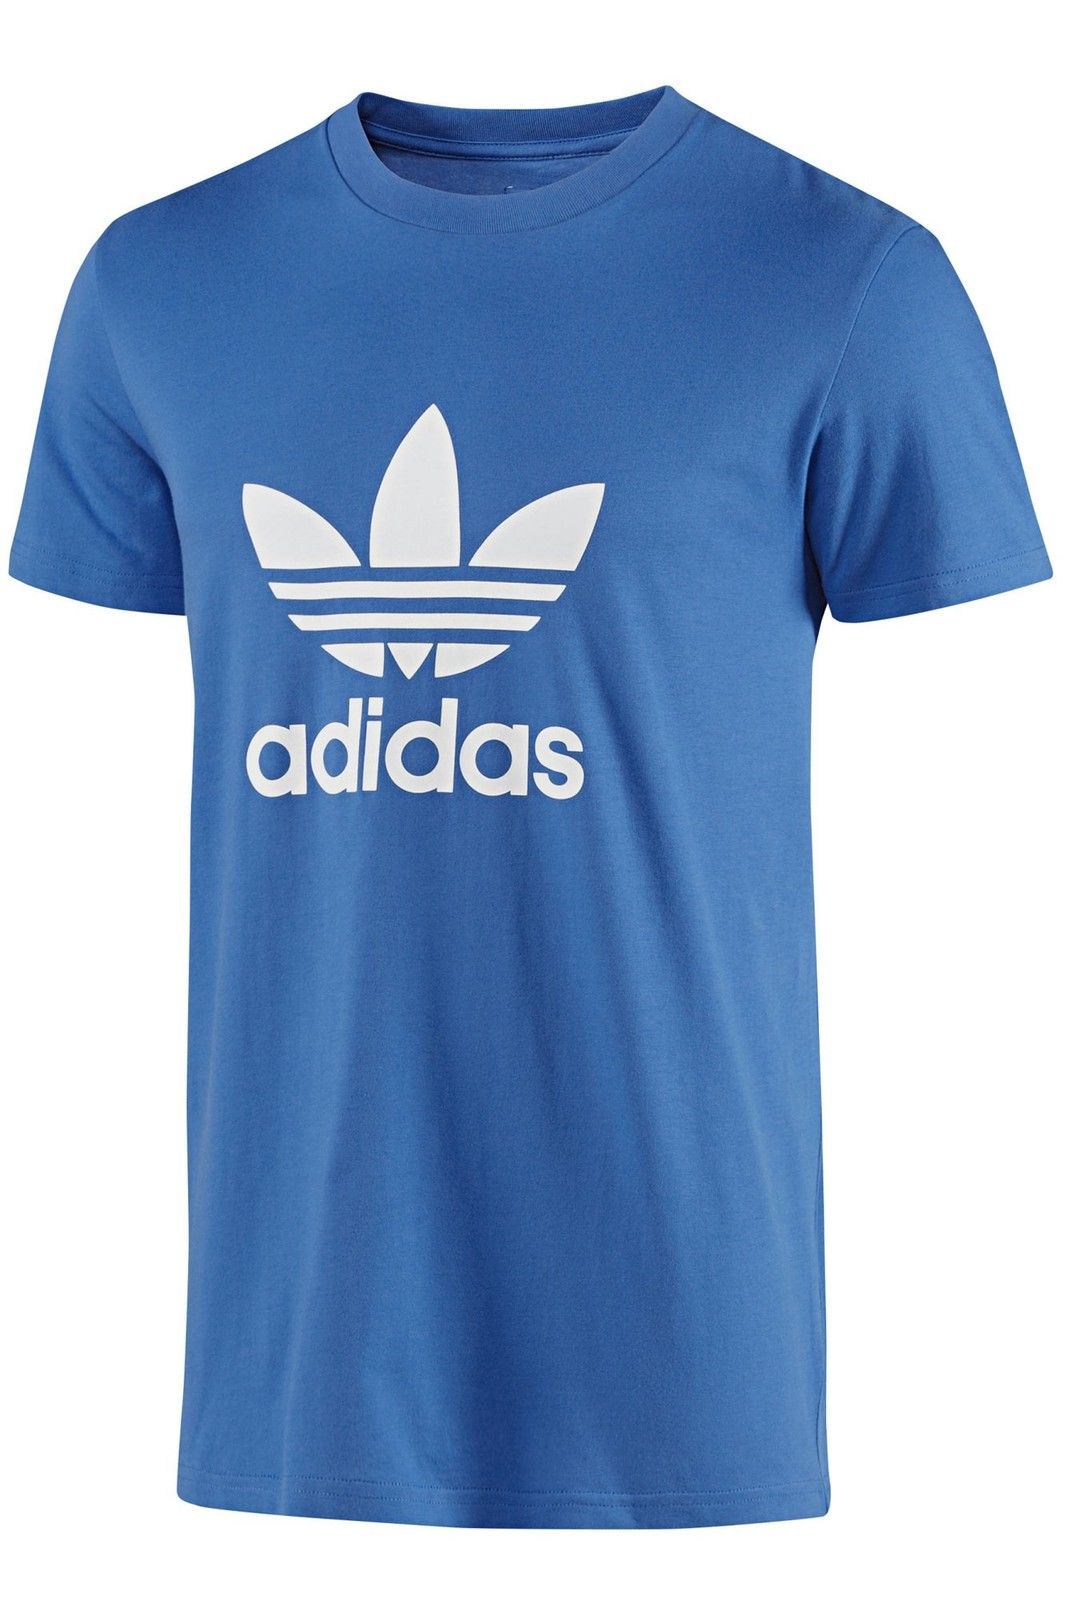 Adidas Originals Trefoil Tee Crew Neck Cotton Casual T-Shirt All Size S M L XL BLUE